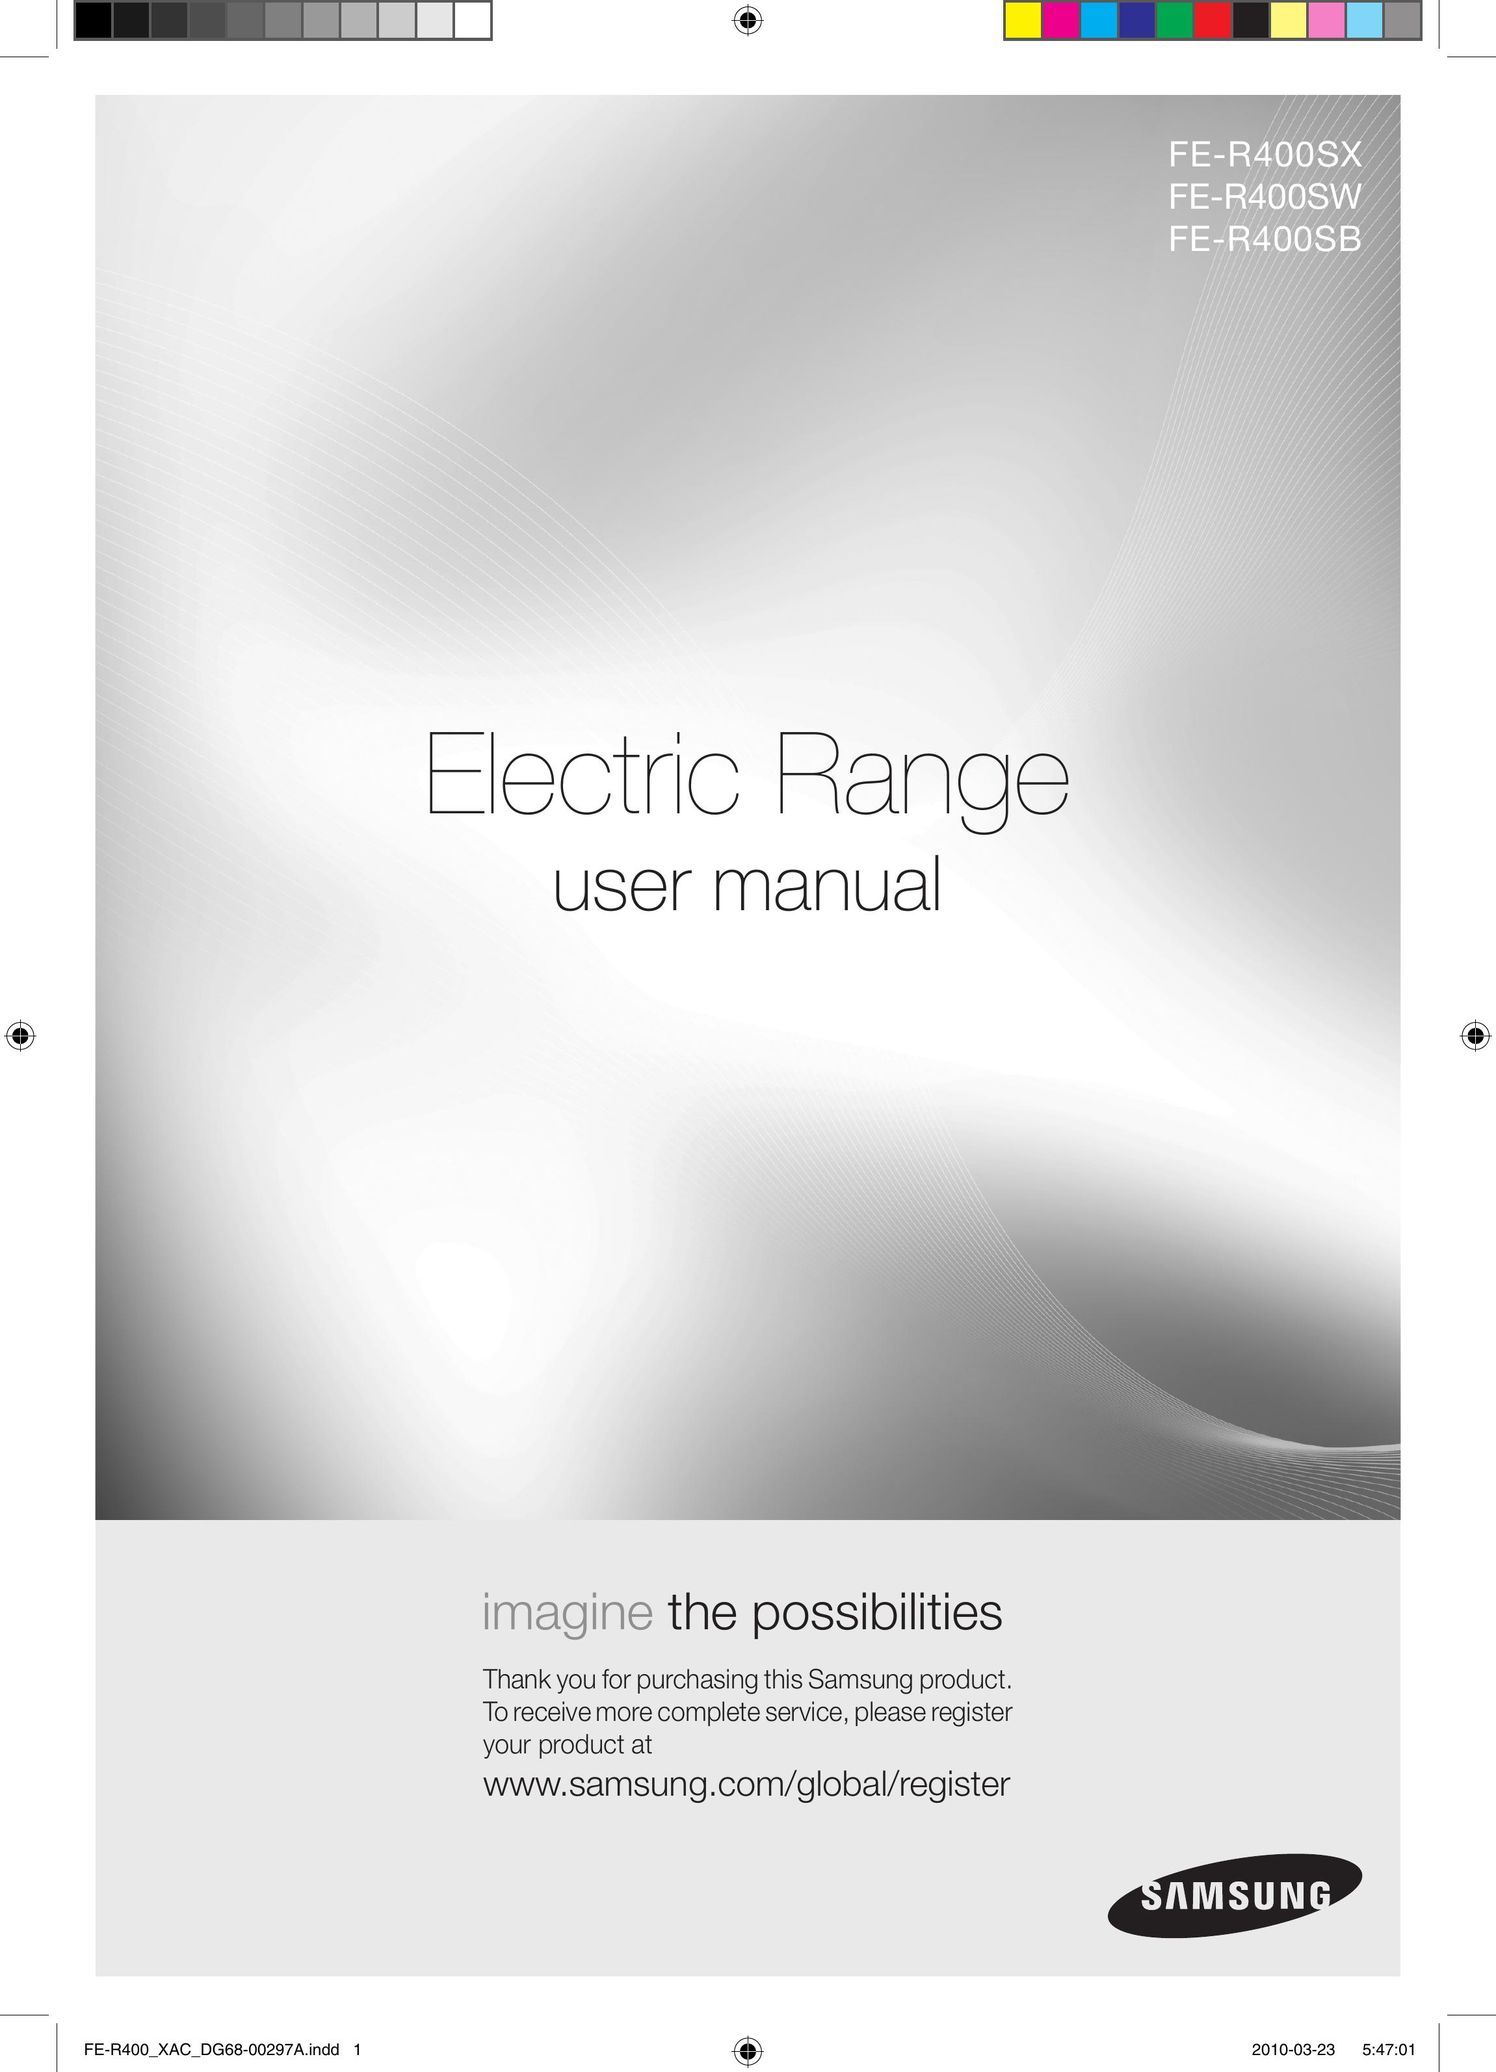 Samsung FE-R400SX Range User Manual